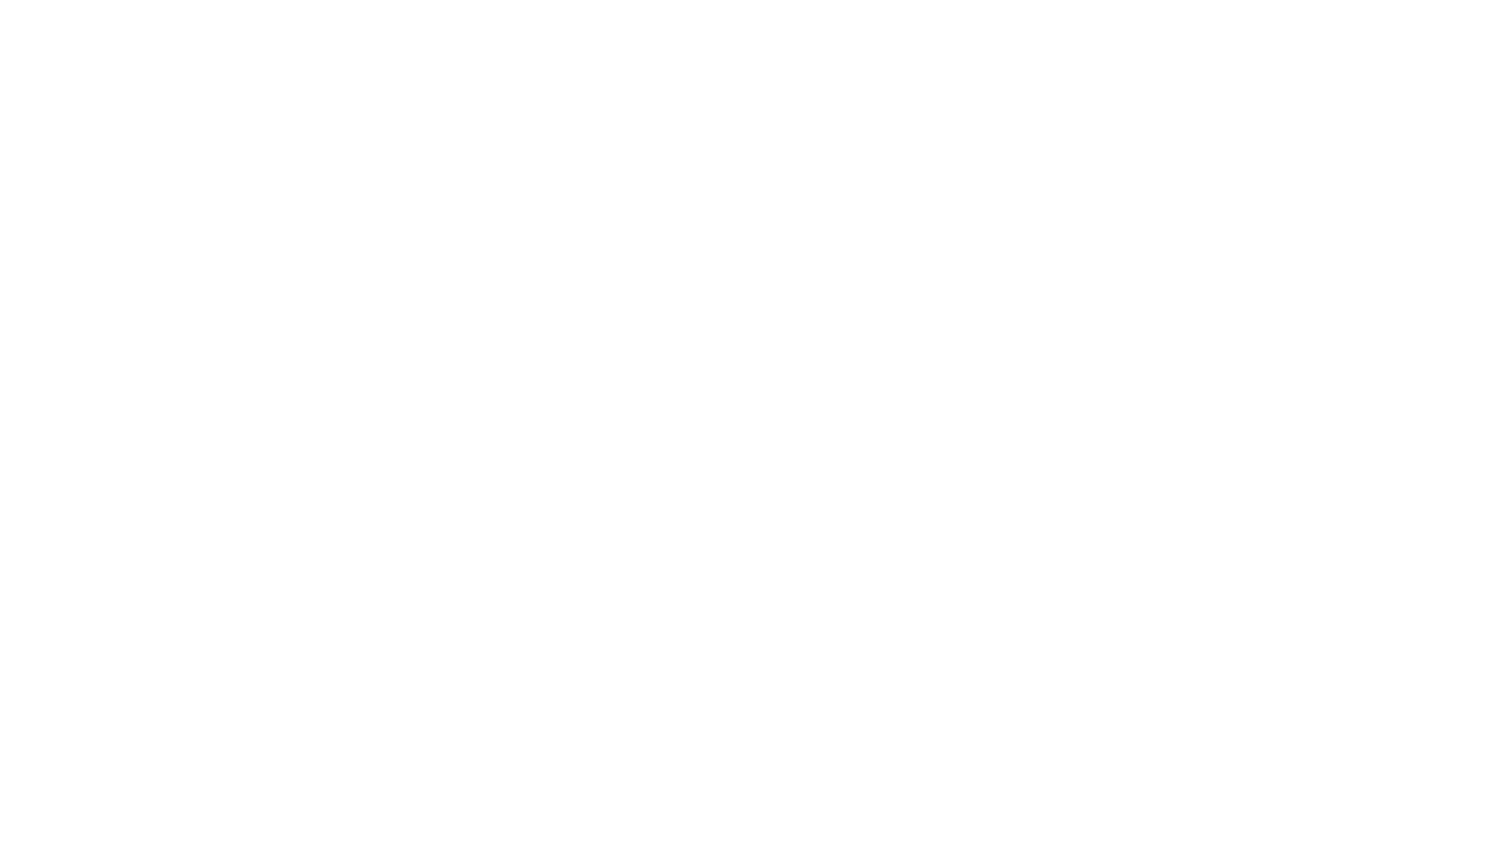 WrightHouse Group